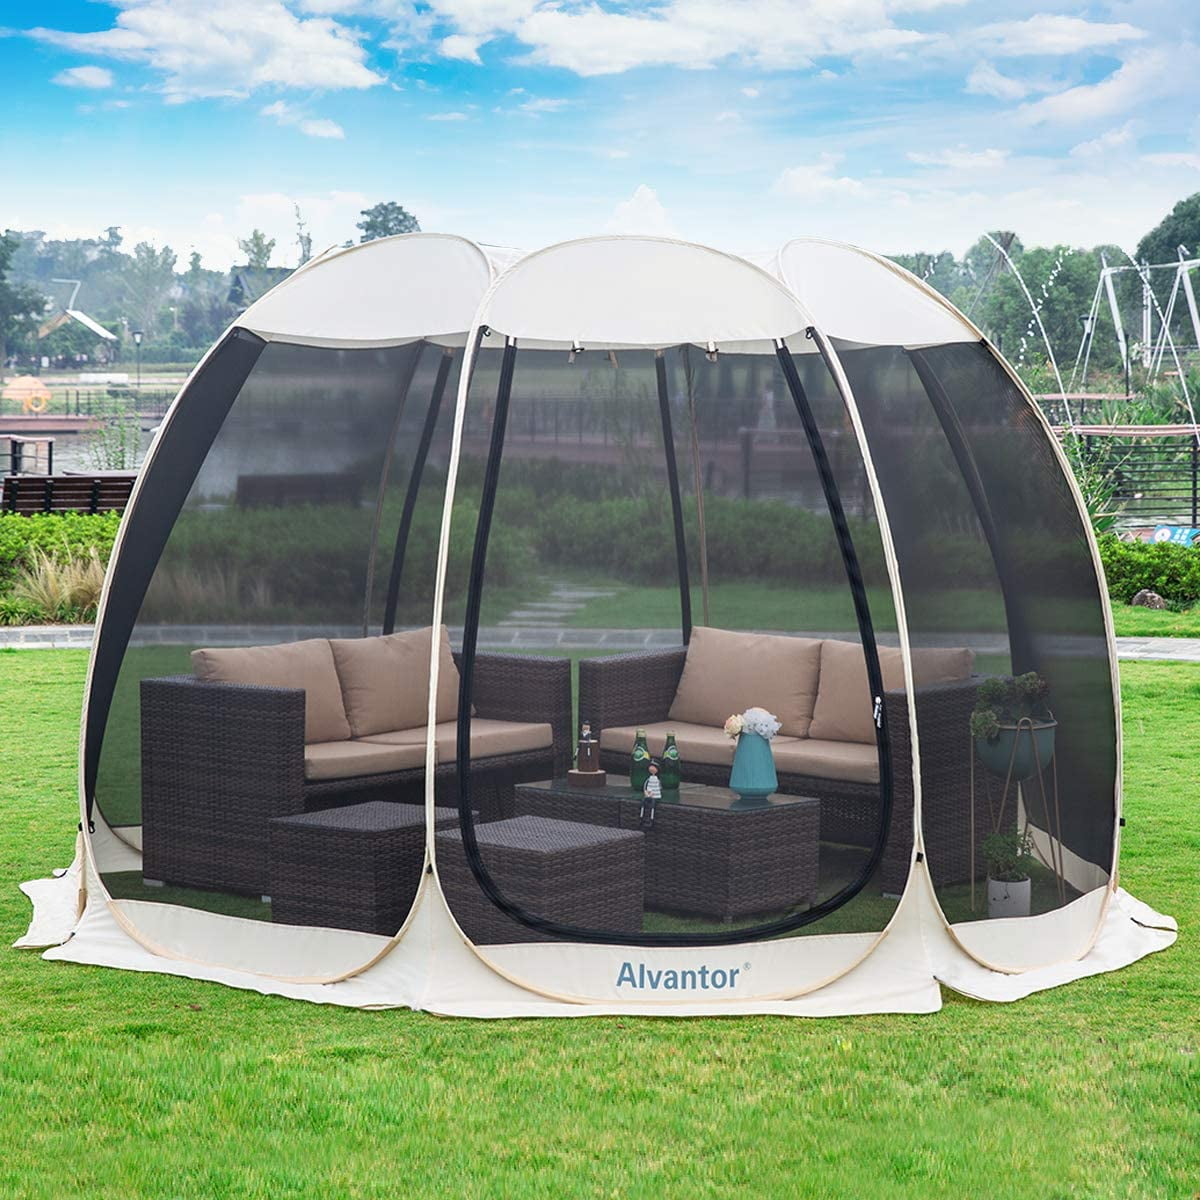 Alvantor 15-Person Camping Tent